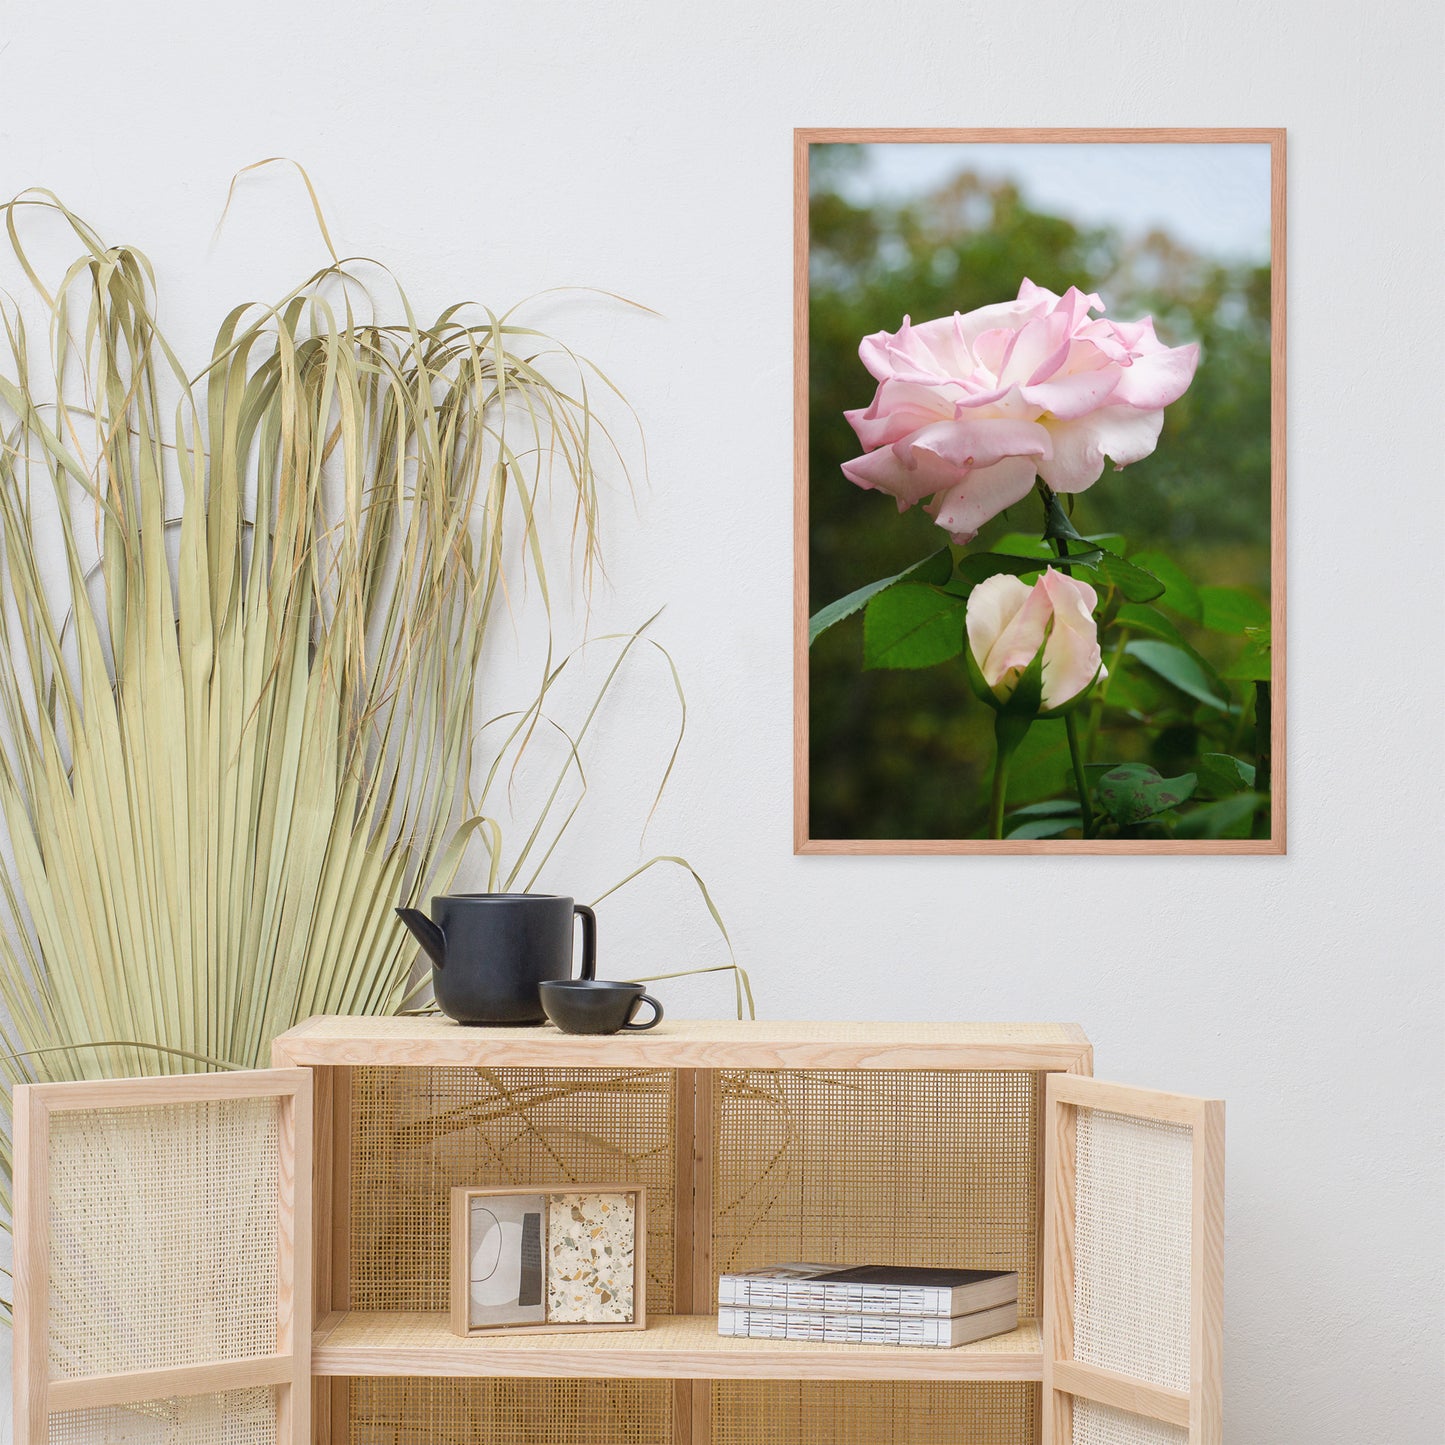 Framed Floral Wall Art: Admiration - Pink Rose Floral / Botanical / Nature Photo Framed Wall Art Print - Artwork - Wall Decor - Home Decor